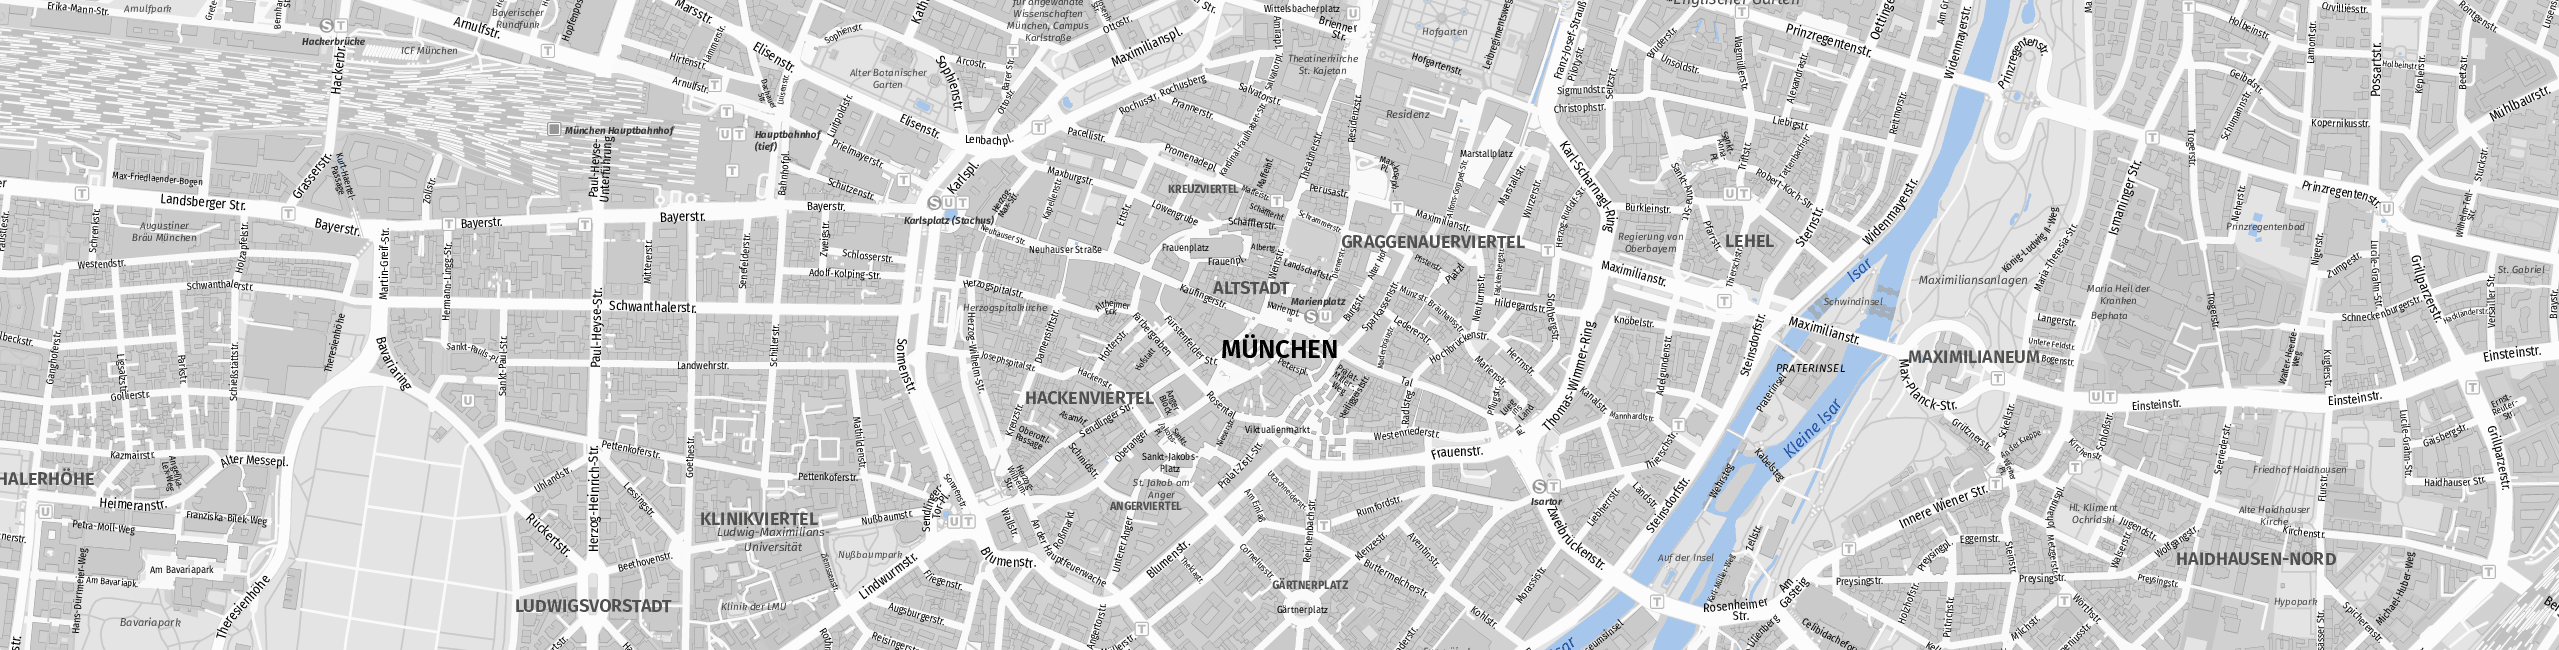 Stadtplan Munich zum Downloaden.